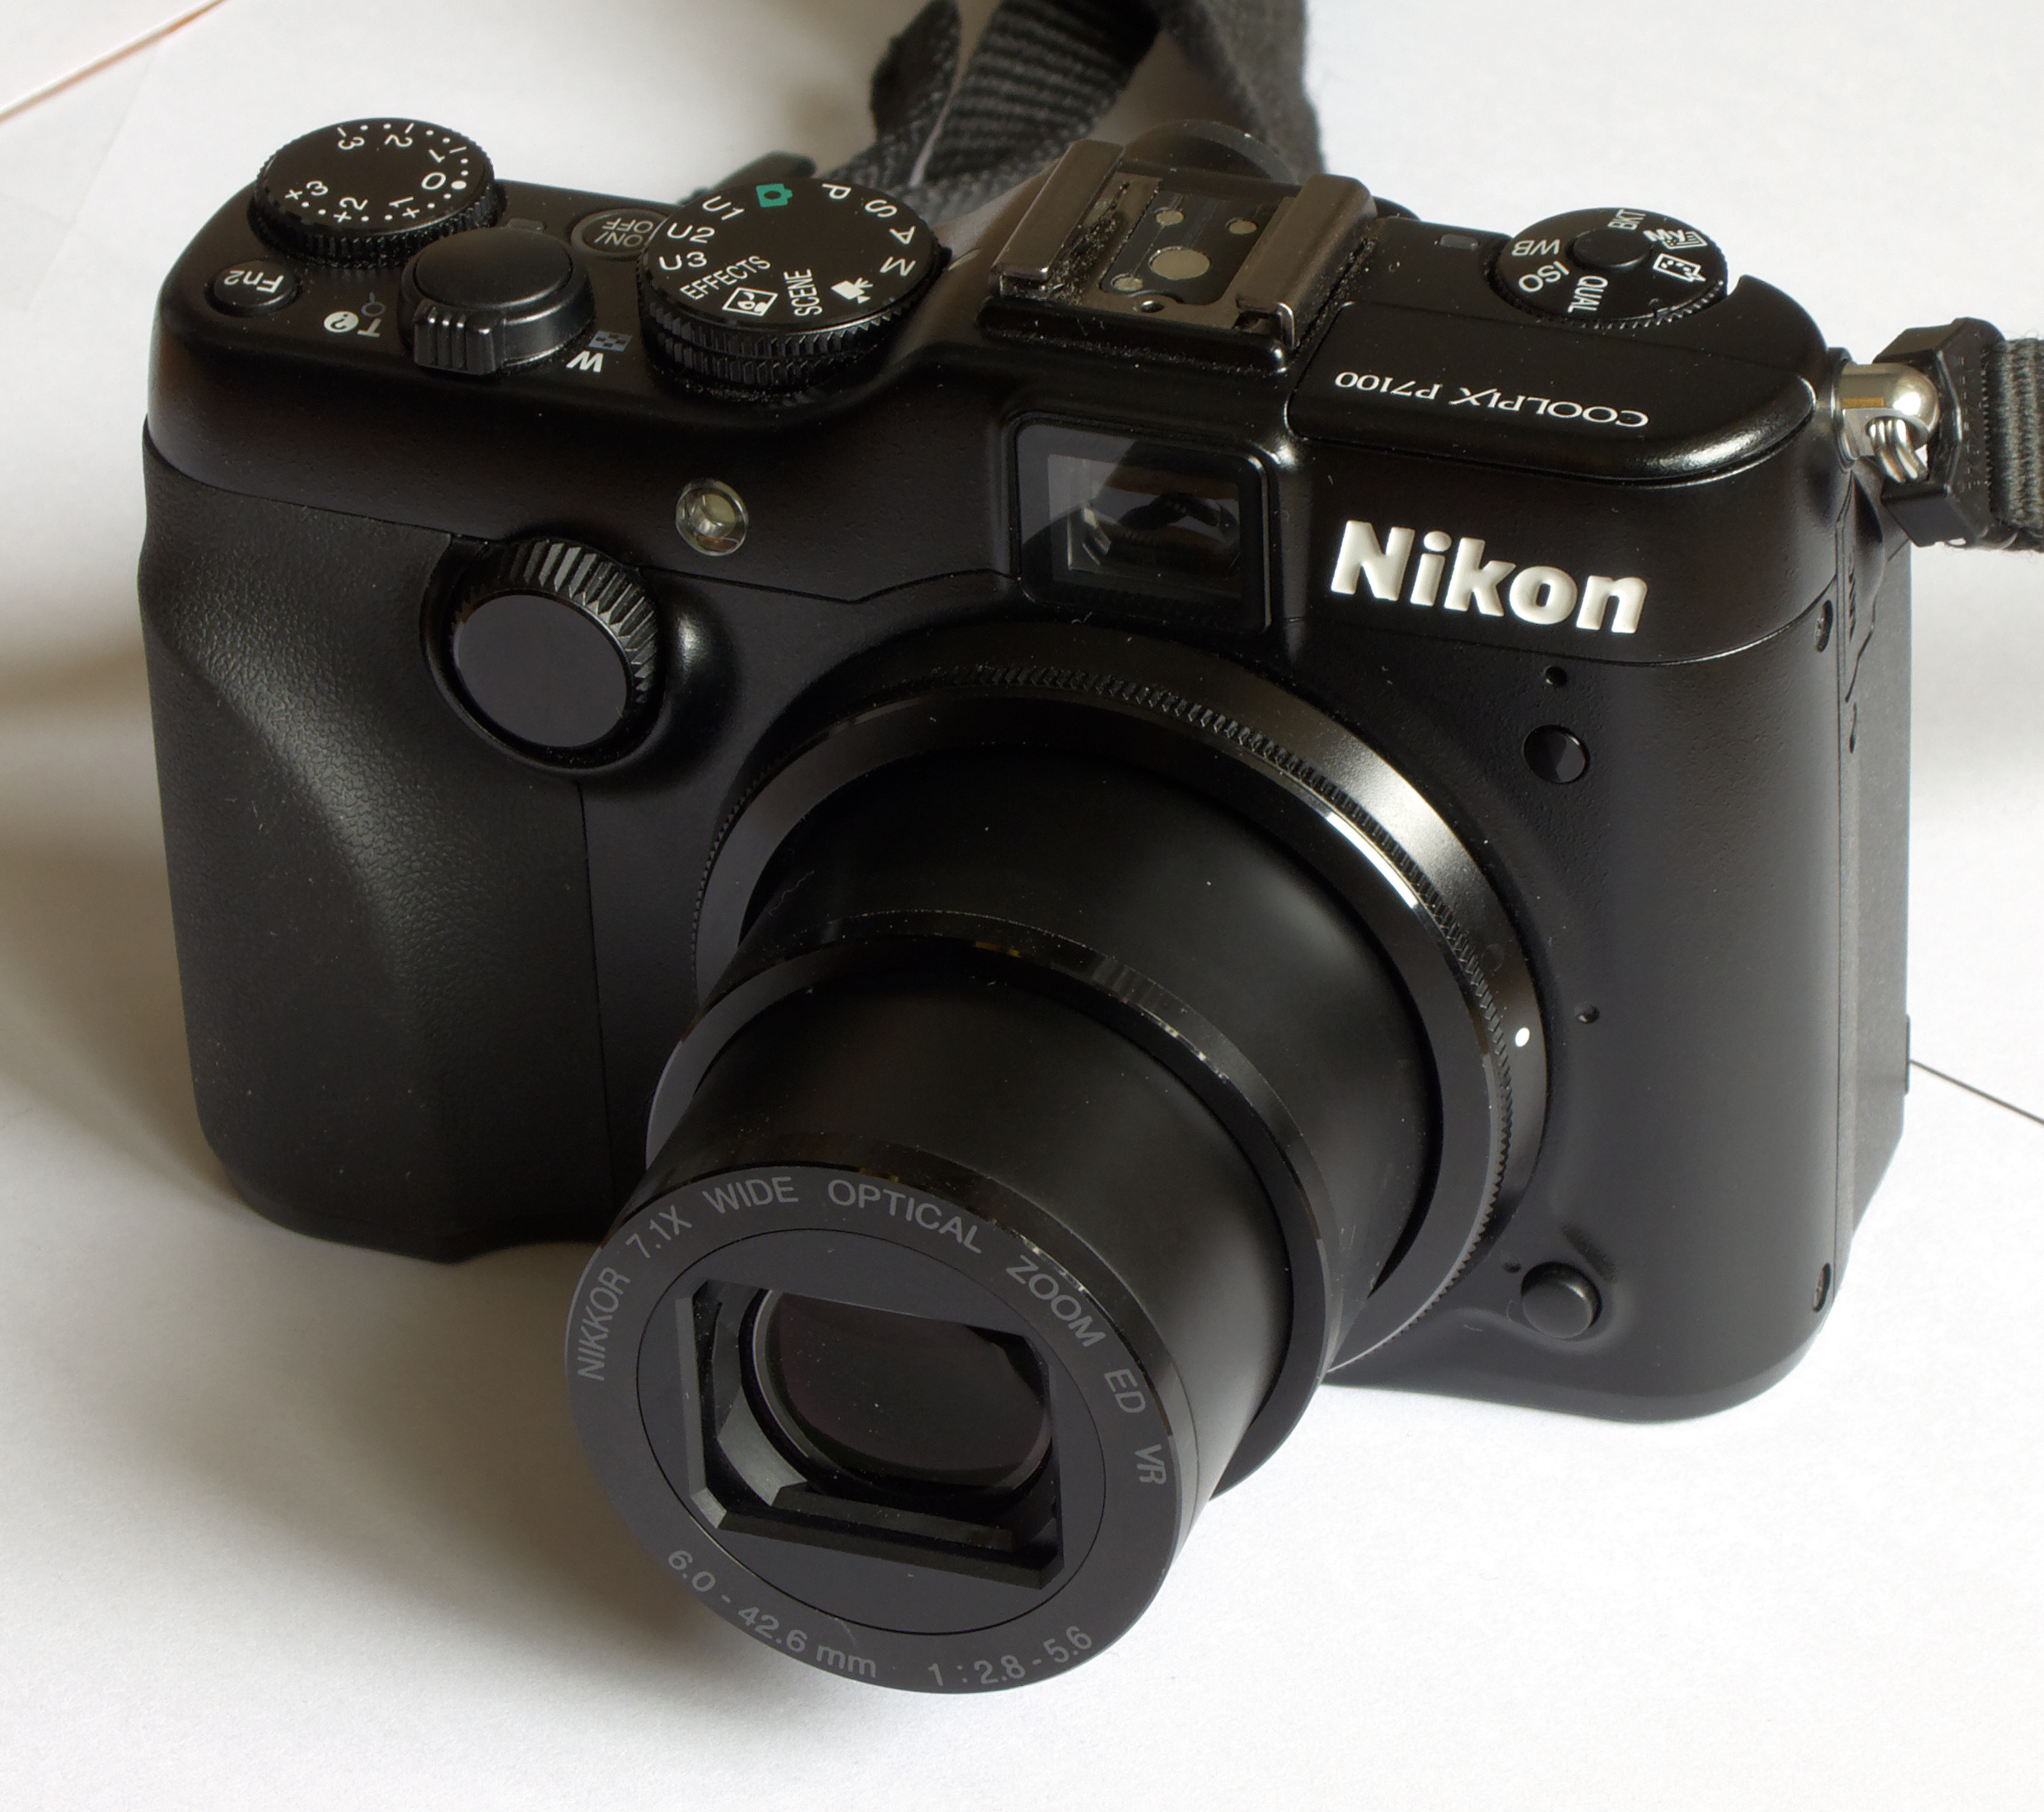 Nikon Coolpix P1000 - Wikipedia